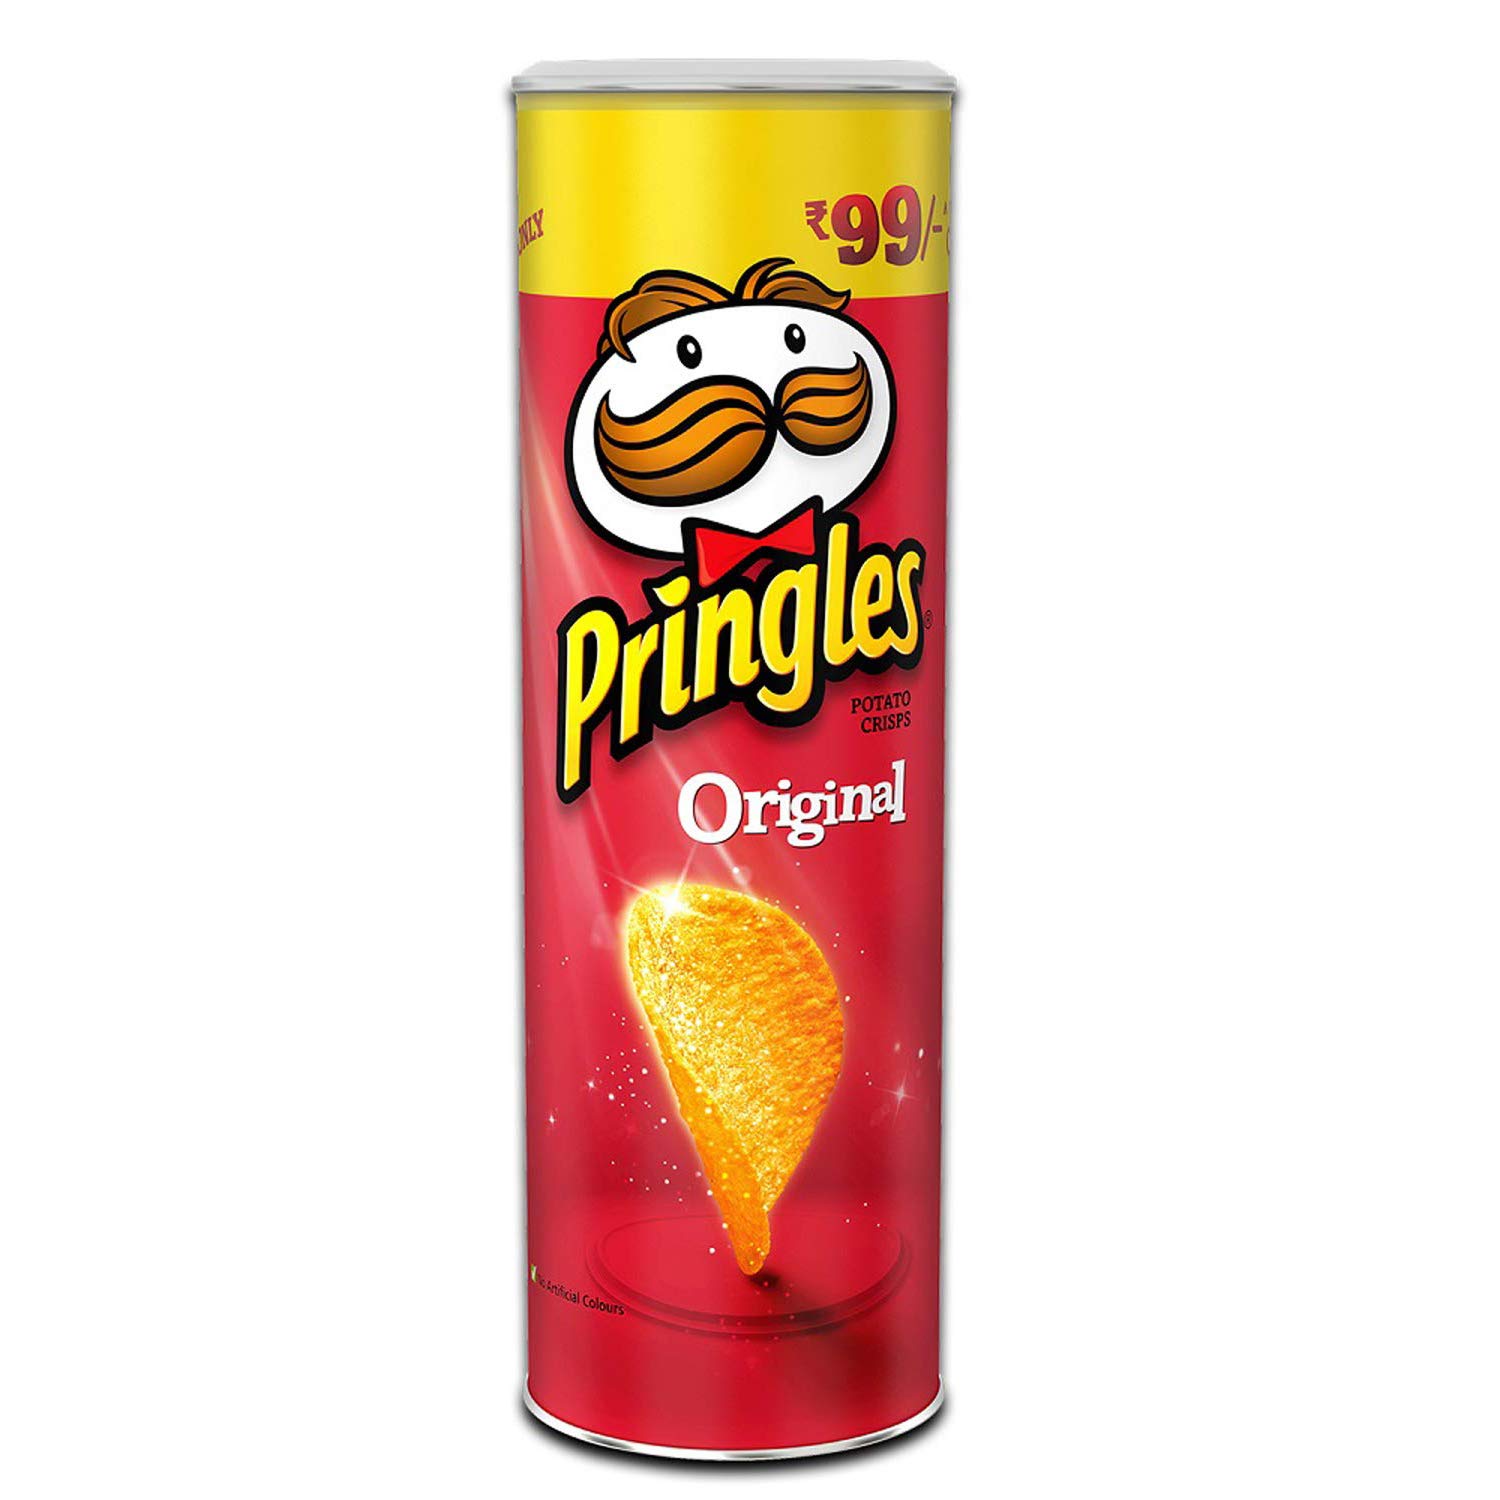 Buy Pringles Original (110g) Online @ ₹99 from ShopClues